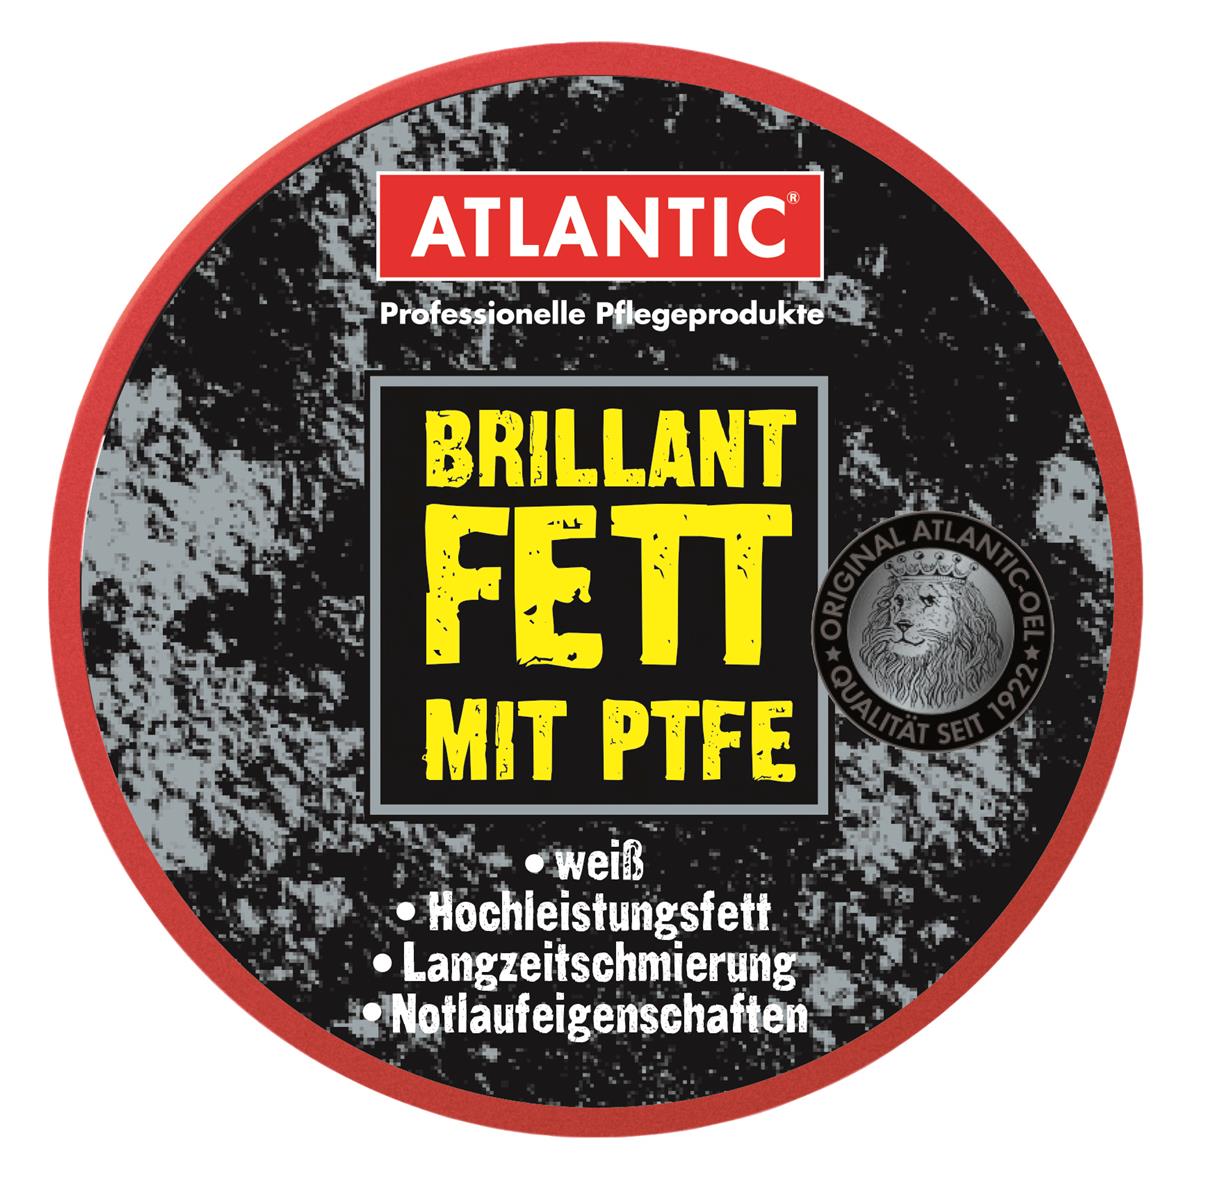 Atlantic weißes Brilliantfett mit PTFE